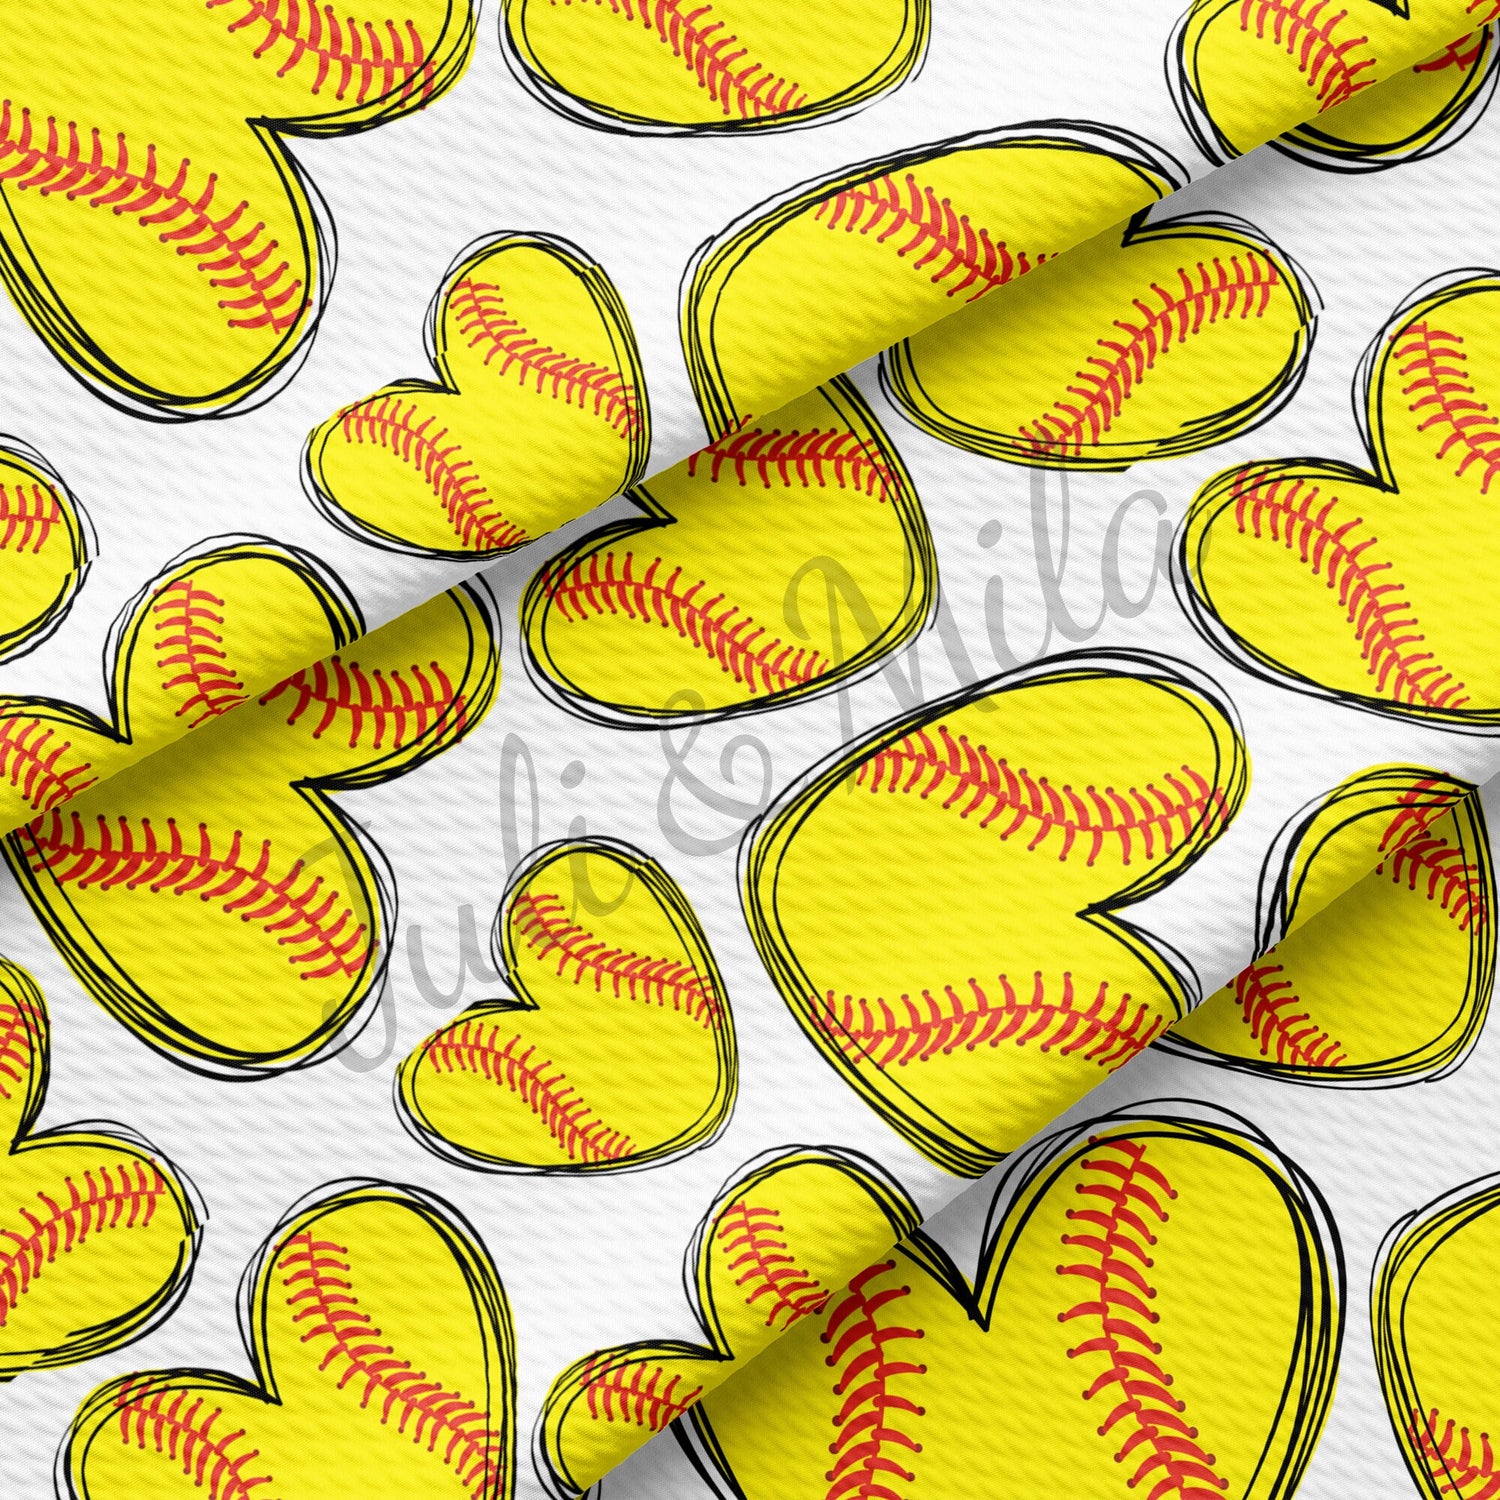 Bullet Fabric Sports - Softball